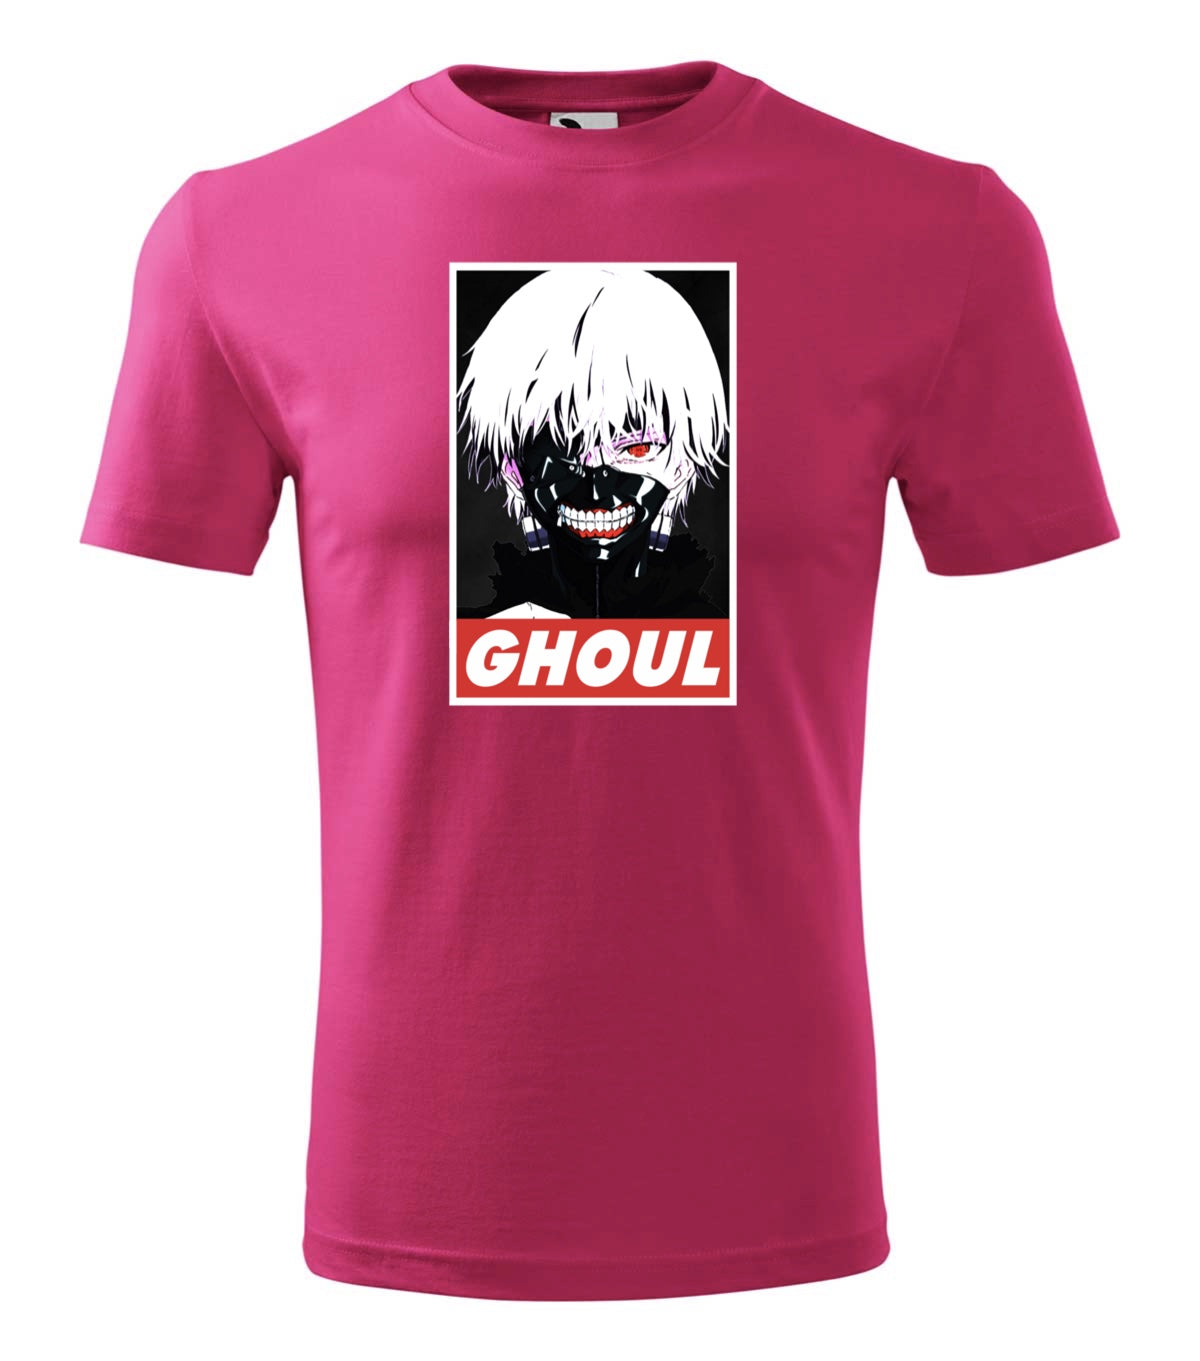 Ghoul gyerek póló